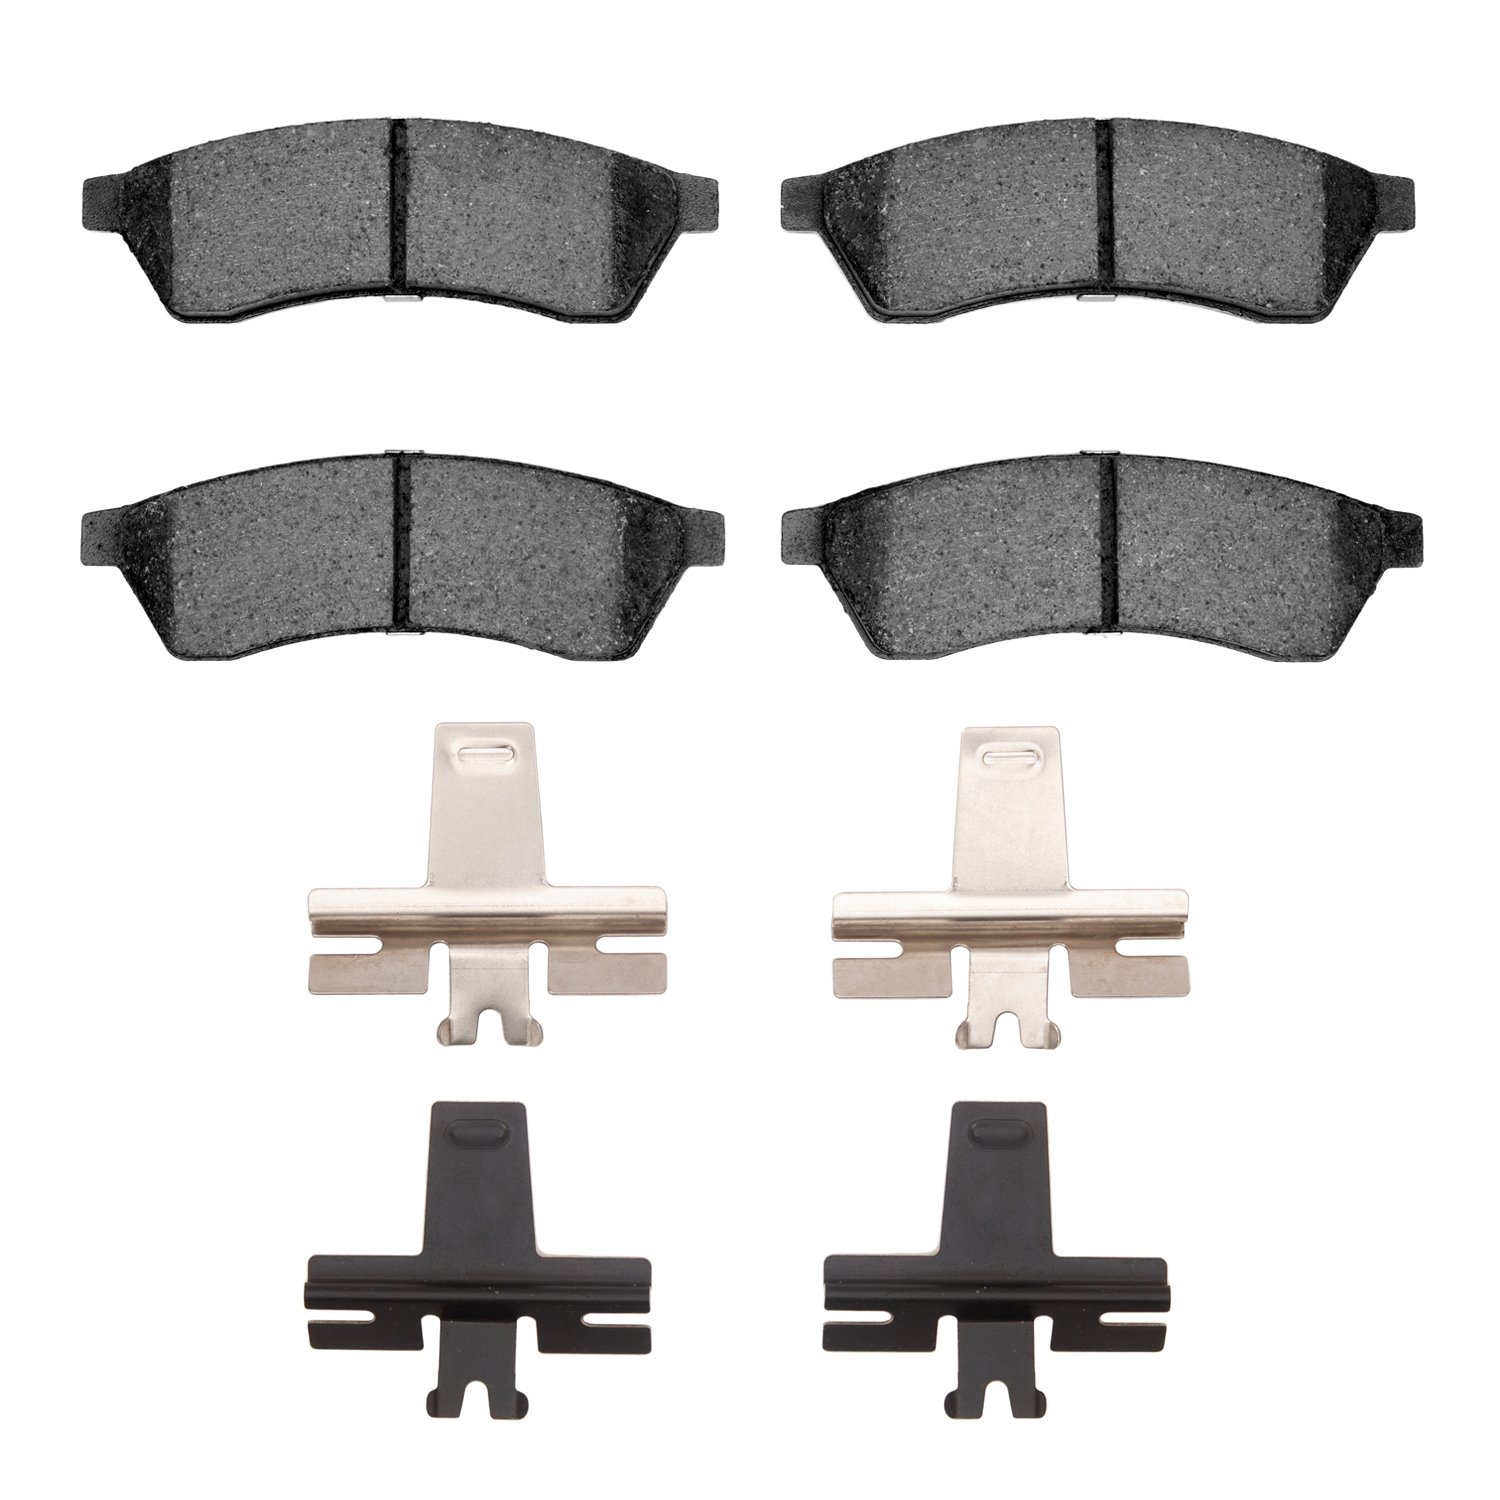 1551-1030-01 5000 Advanced Ceramic Brake Pads & Hardware Kit, 2004-2010 Multiple Makes/Models, Position: Rear